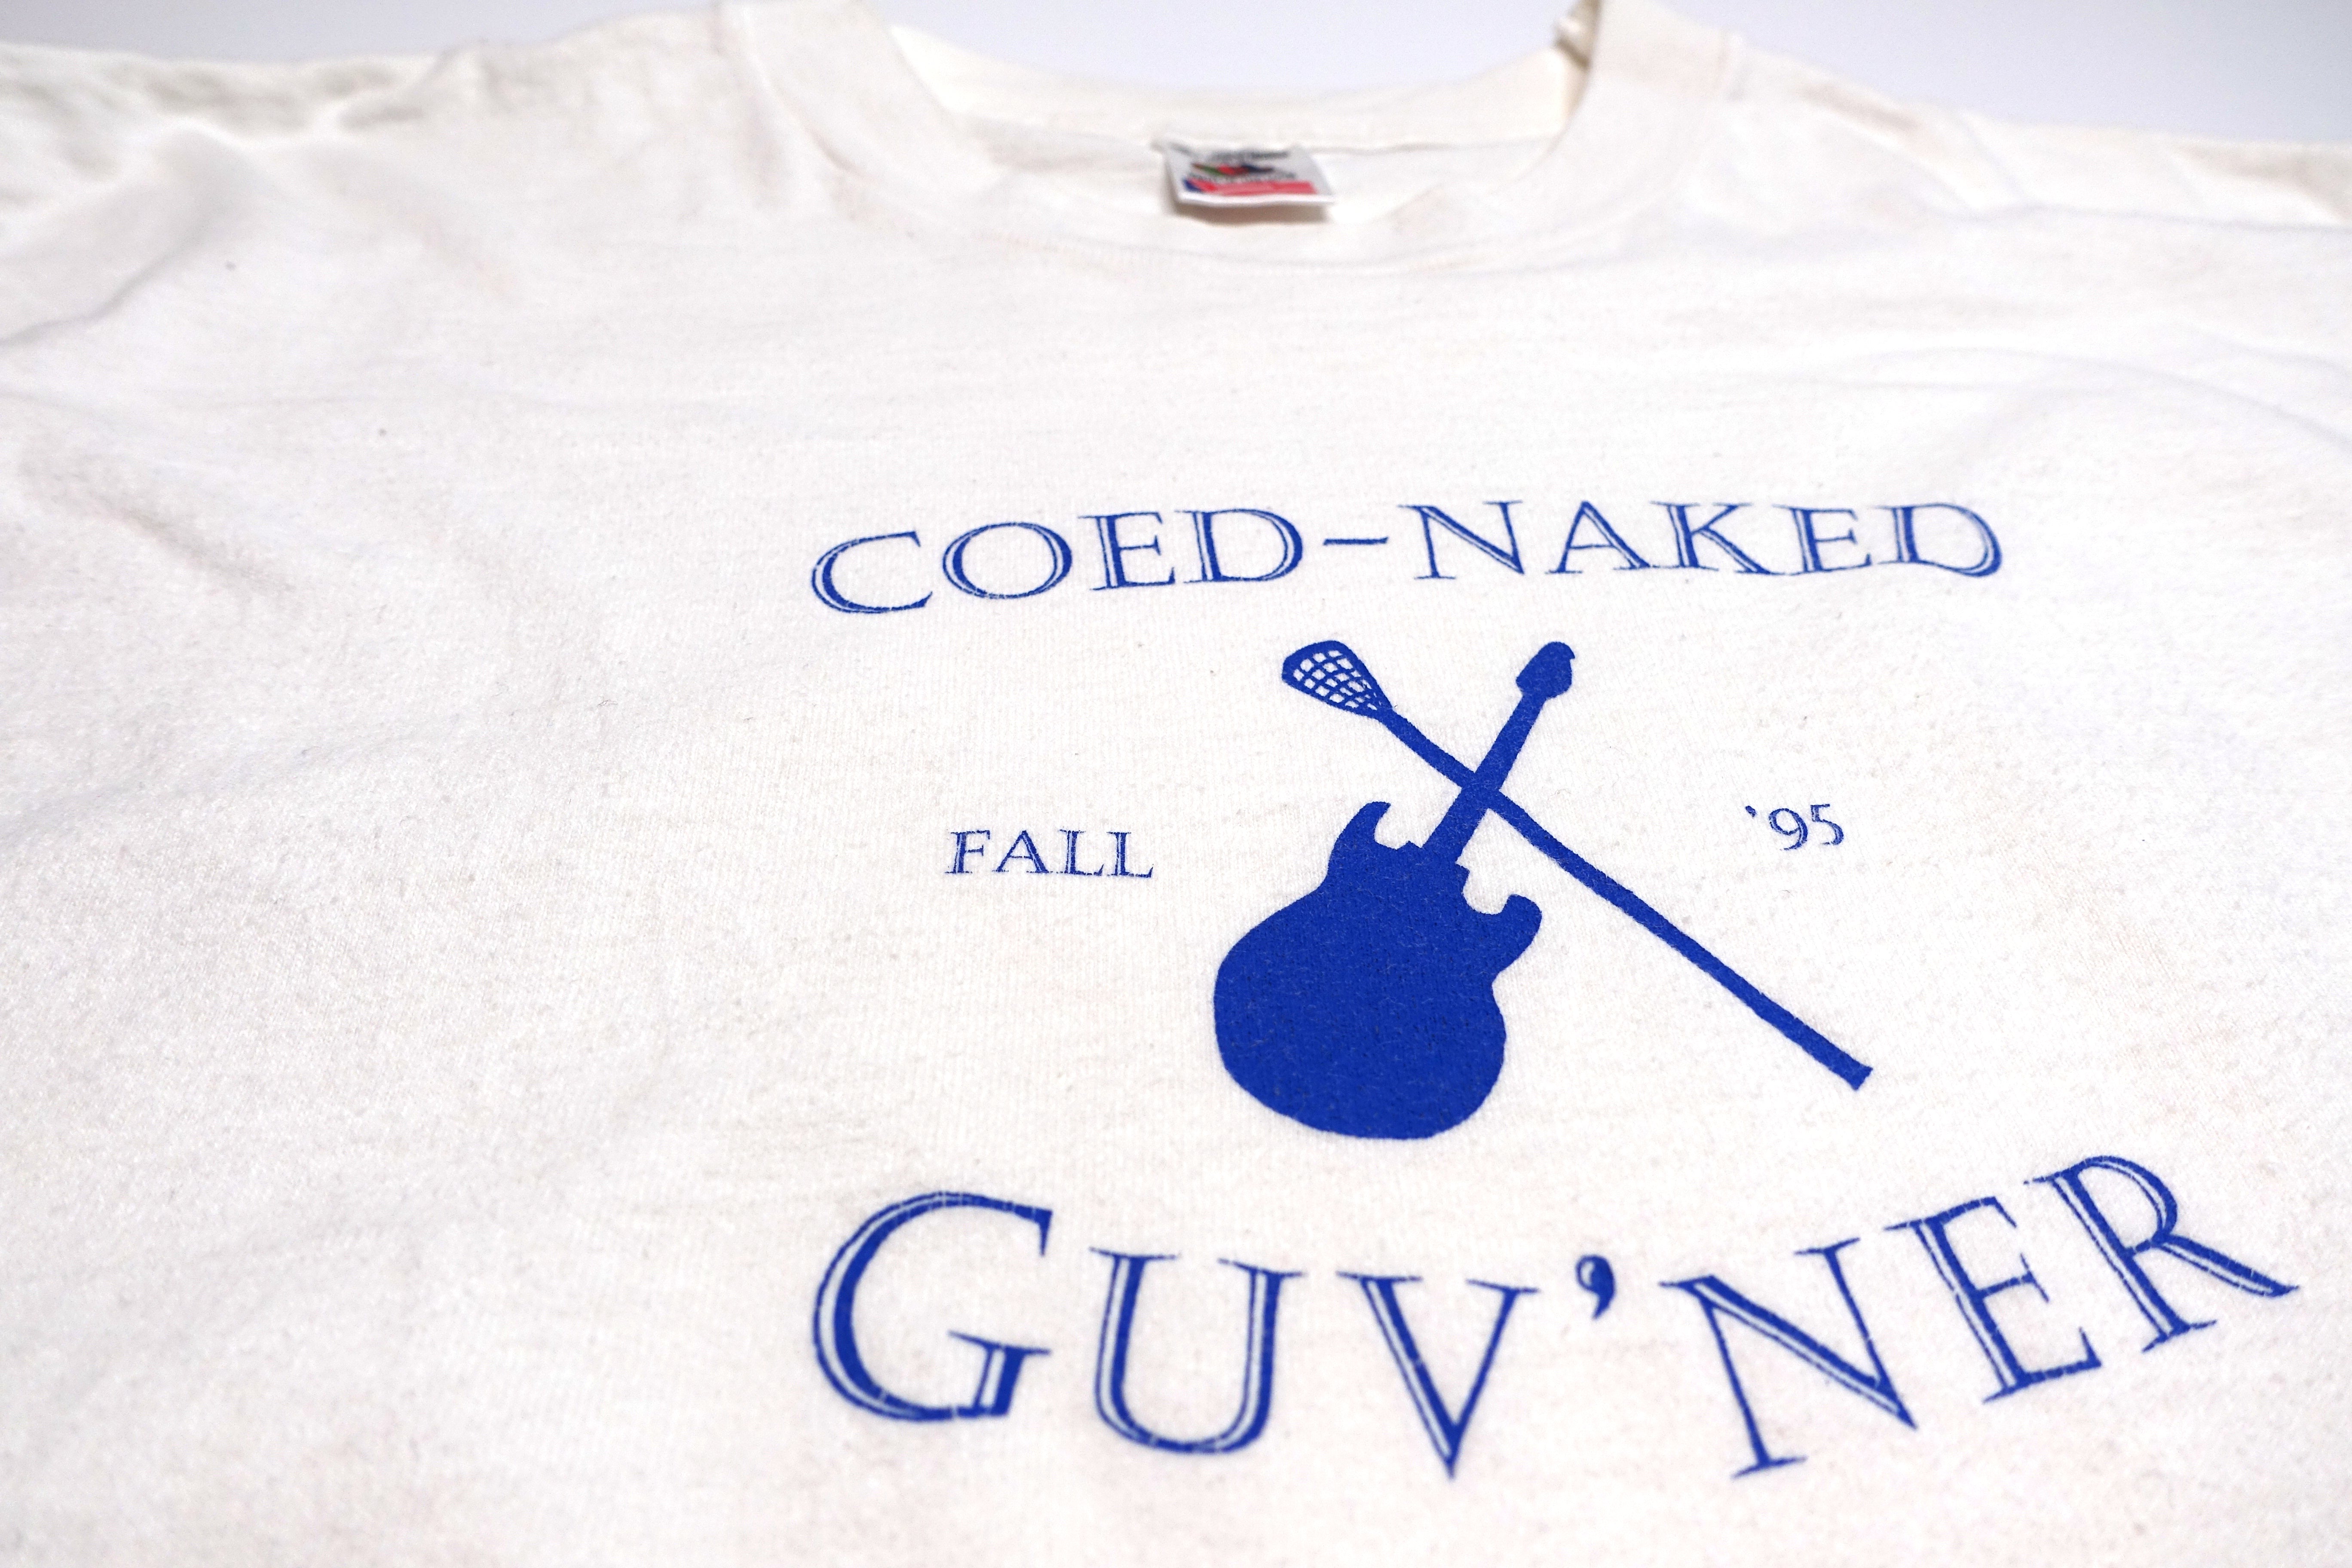 Guv'ner ‎– Co-Ed Naked 1995 Tour Shirt Size Medium